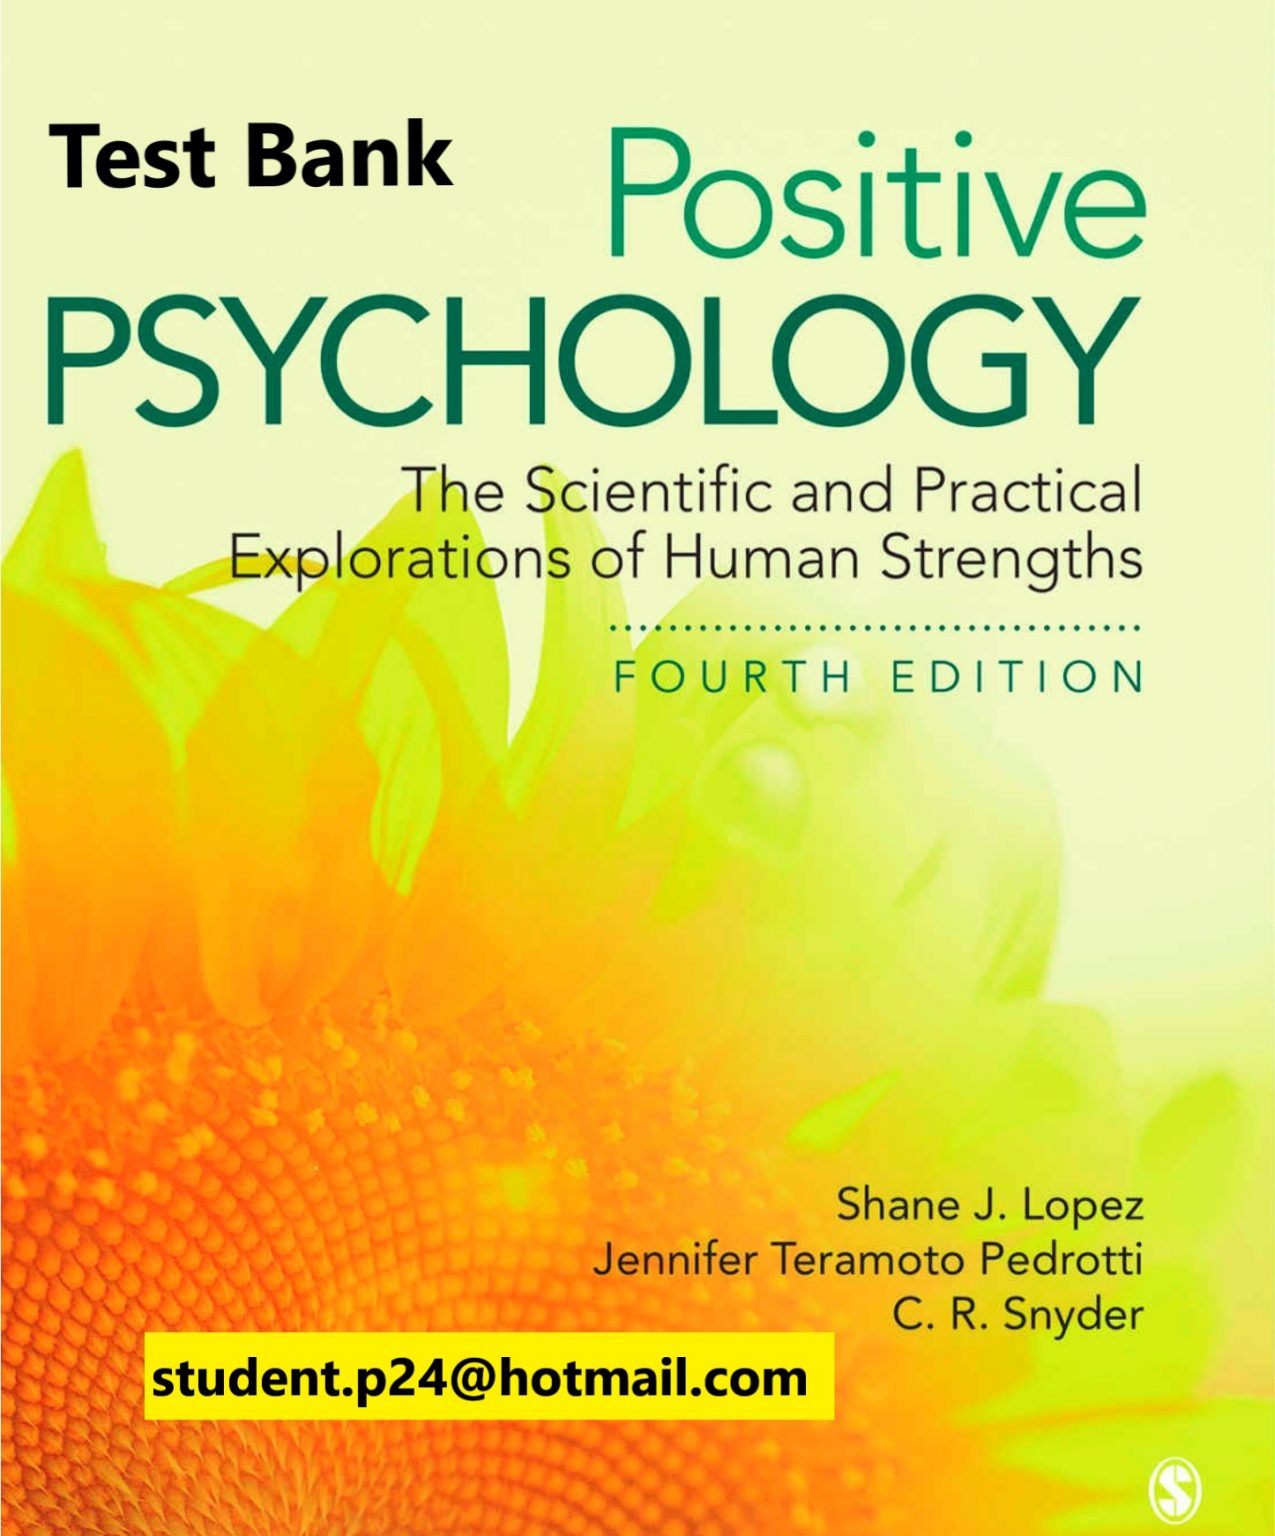 dissertation of positive psychology